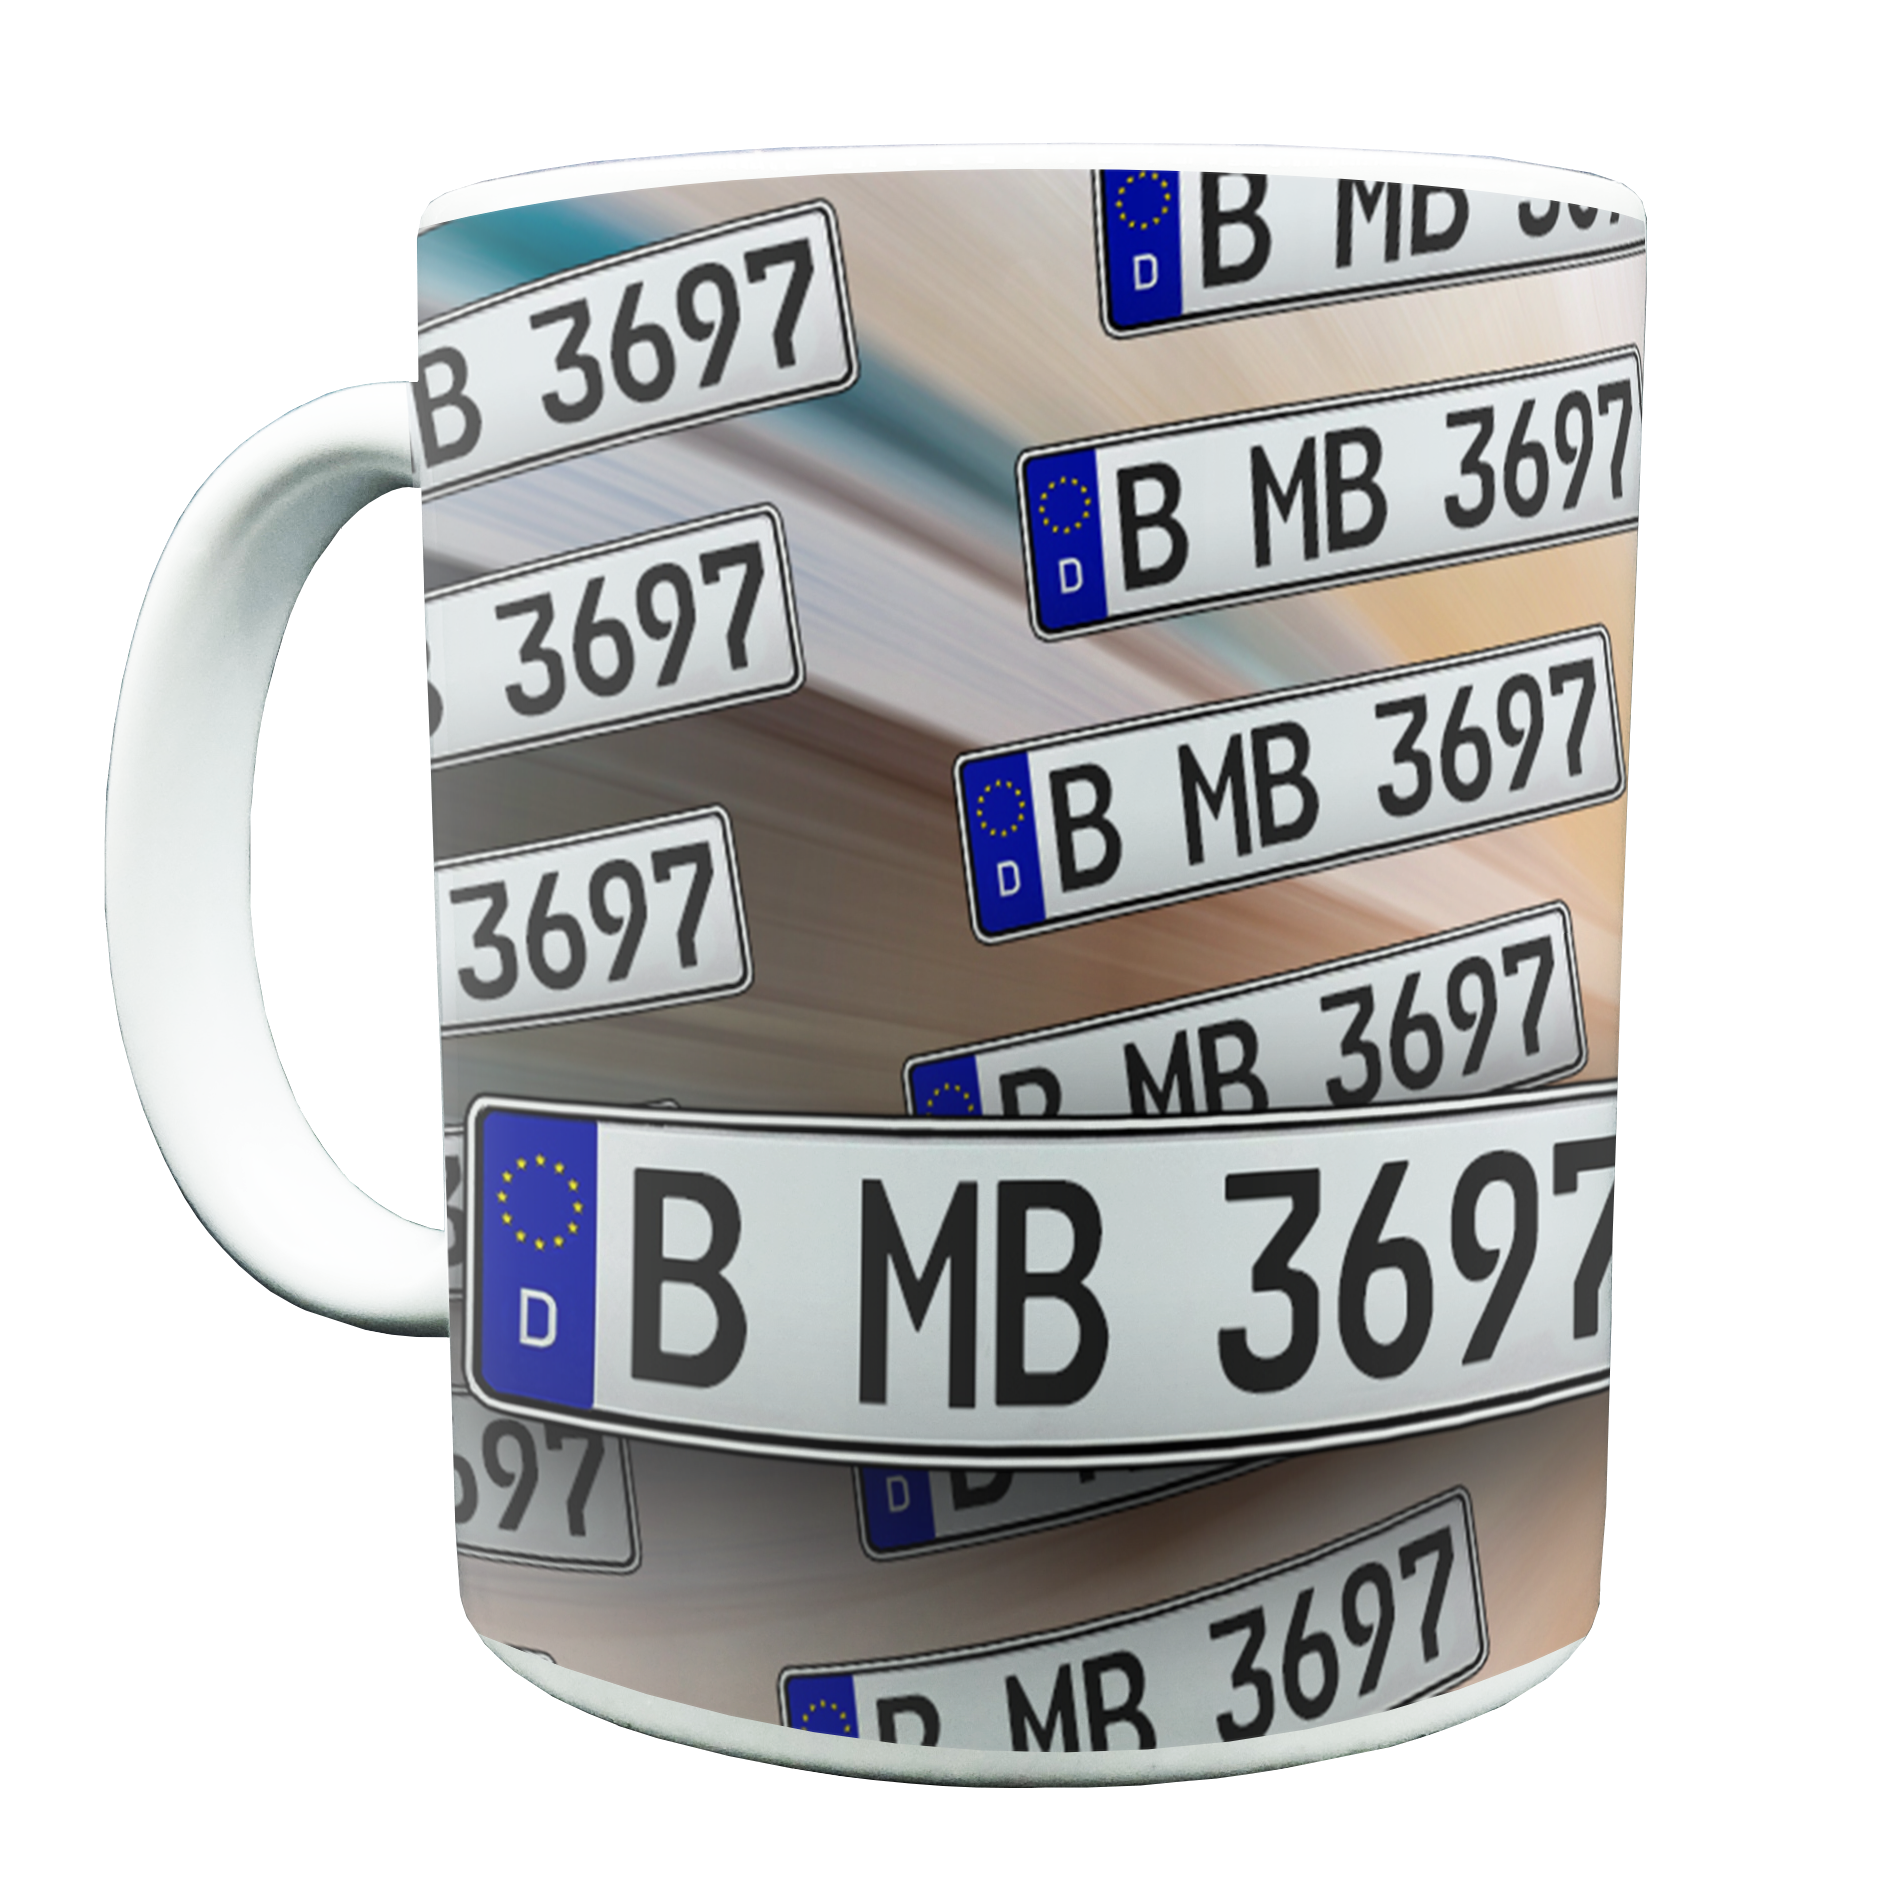 License plate mug